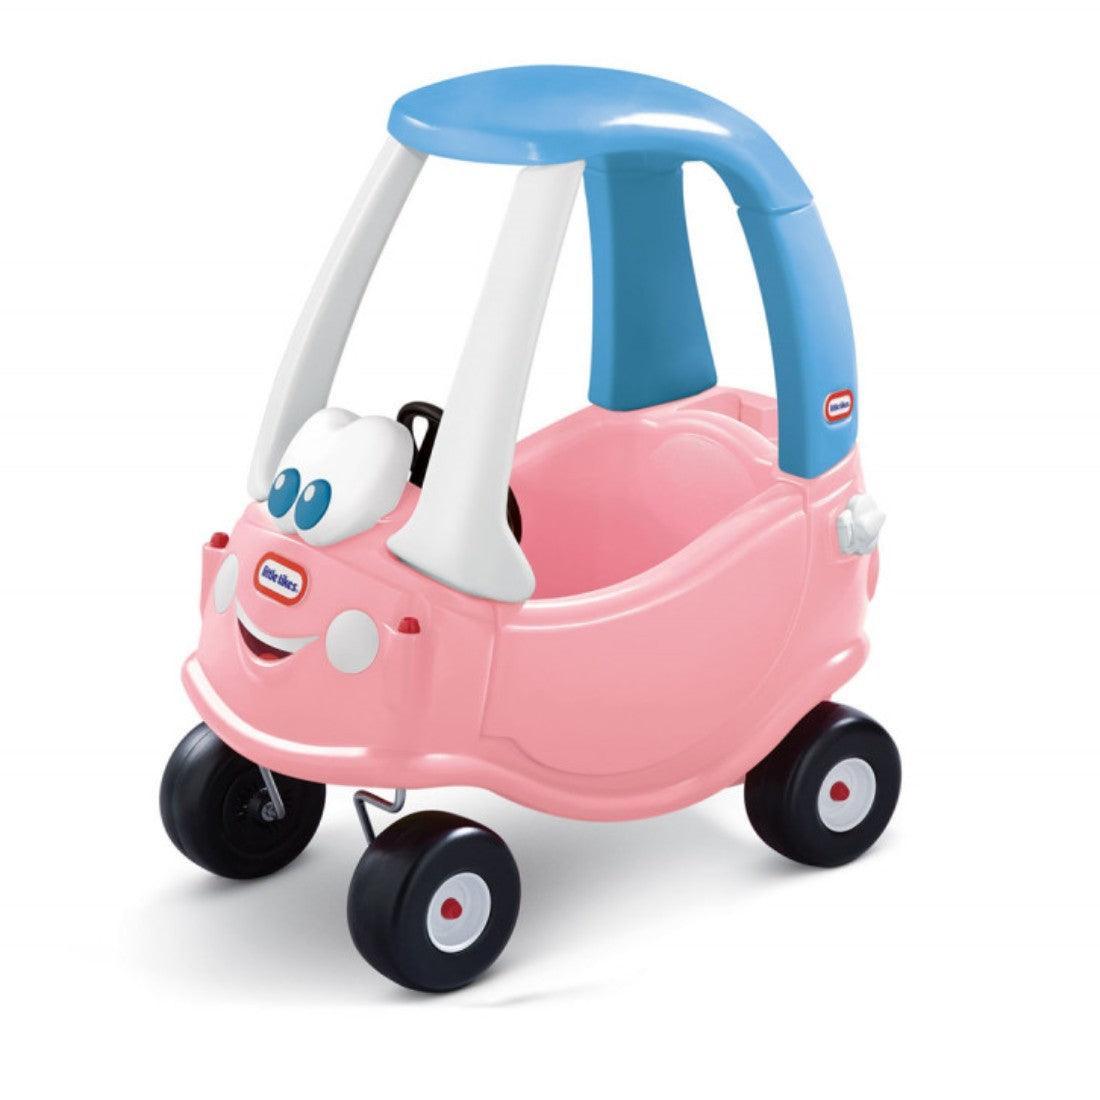 Little Tikes - Little Tikes Cozy Coupe Princess Light Pink - Ride Toy - Mari Kali Stores - Cyprus